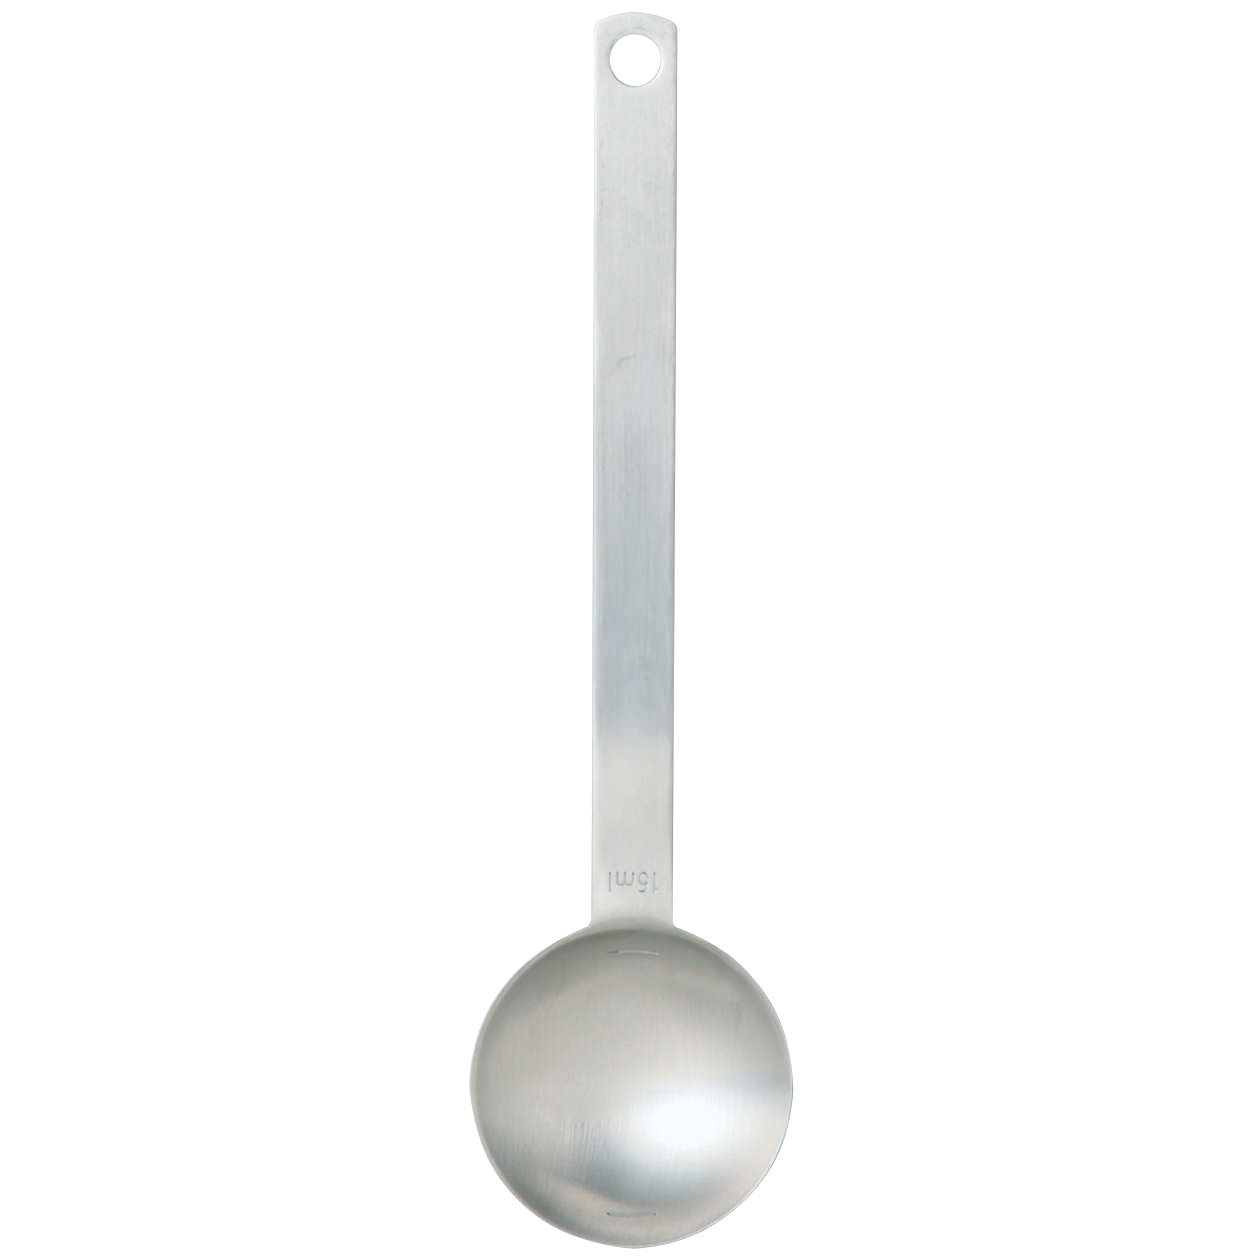 Long Measure Spoon - 15ml